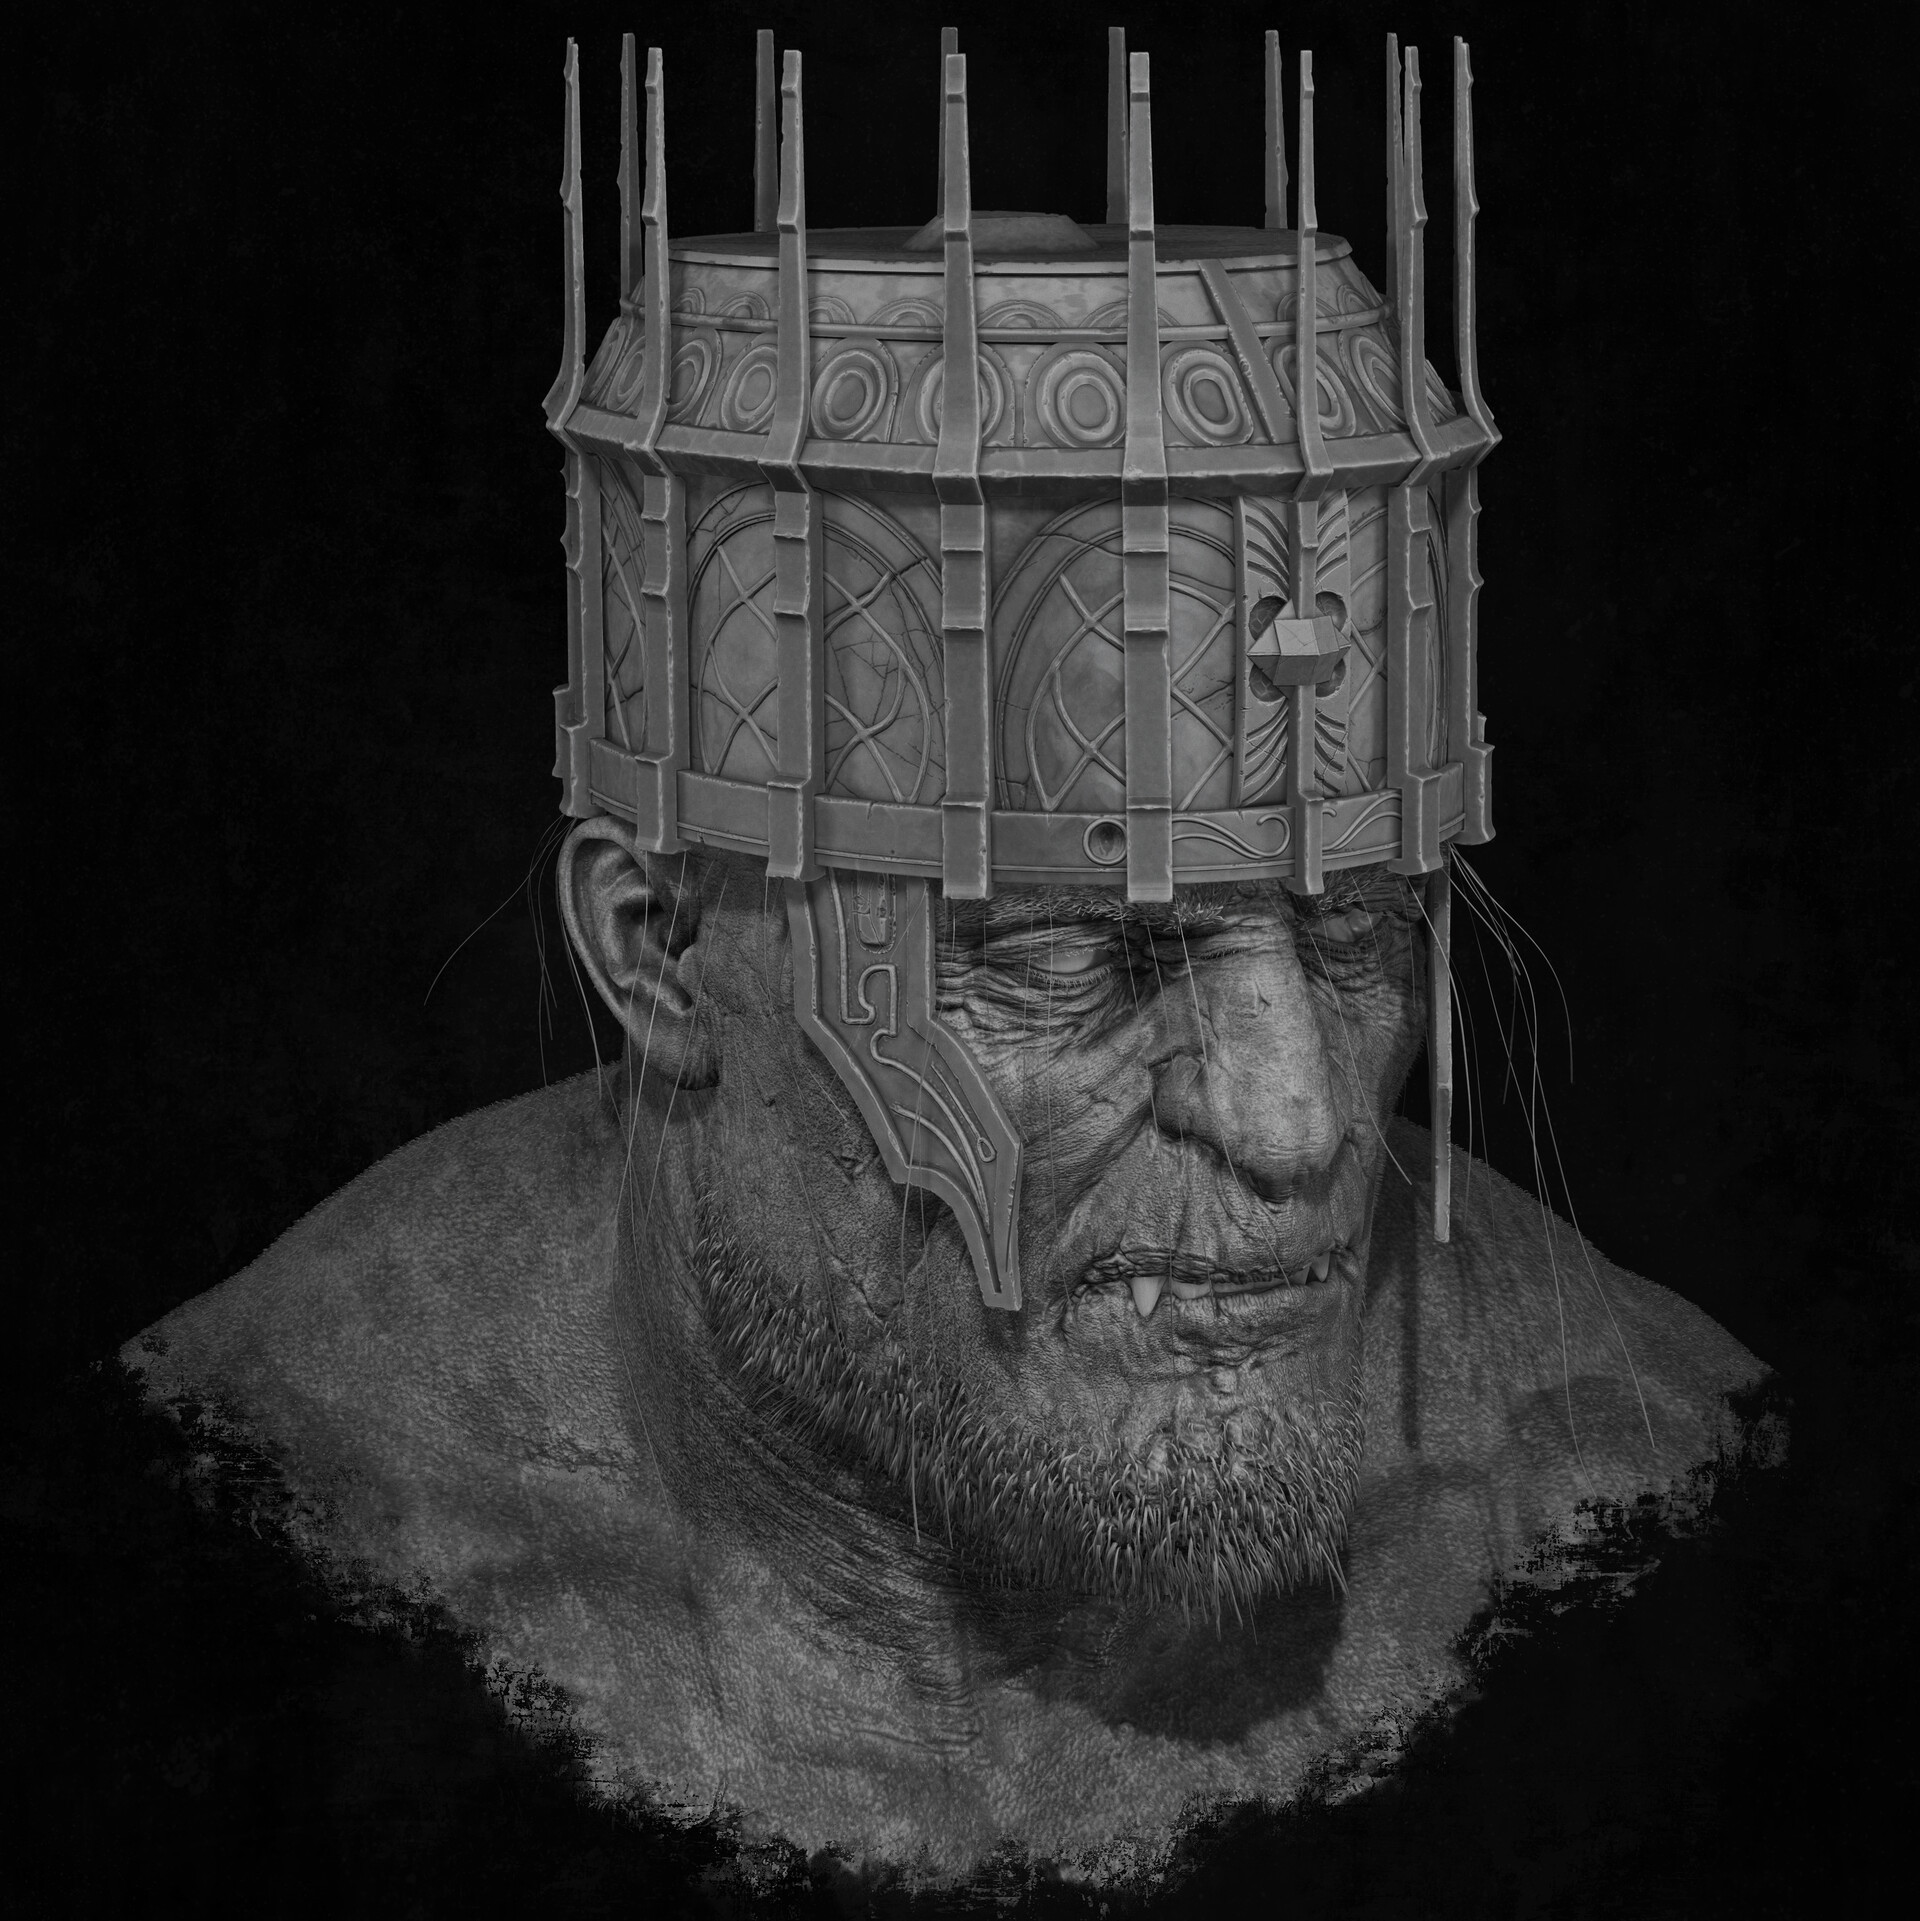 Dark Souls II: Old Iron King by karniz on DeviantArt